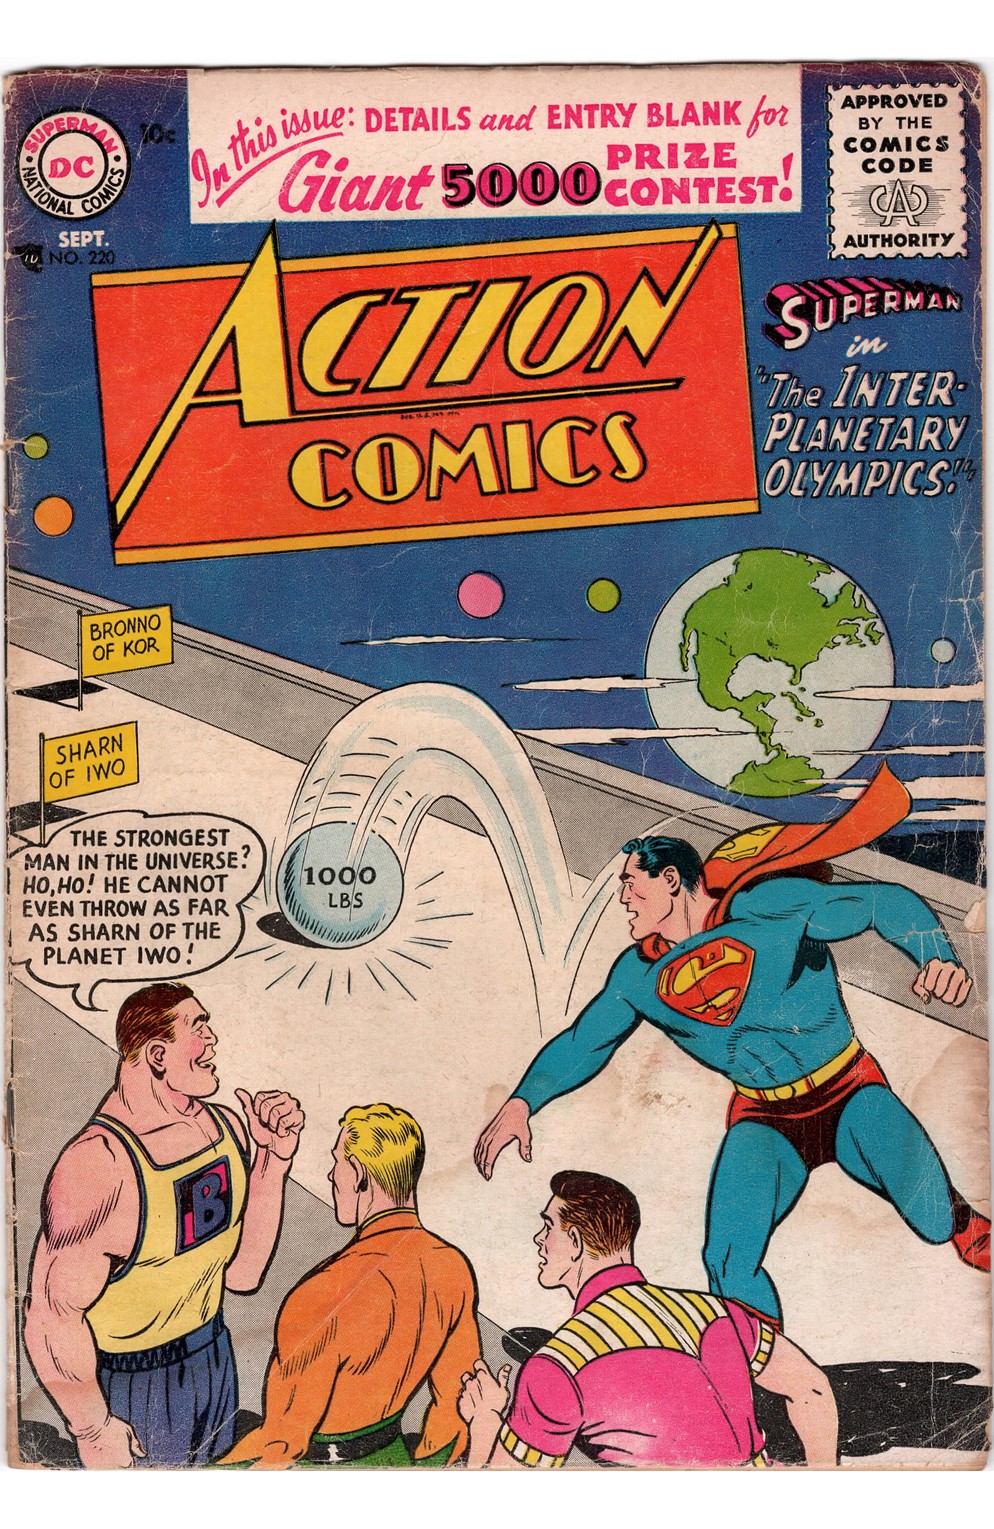 Action Comics #220